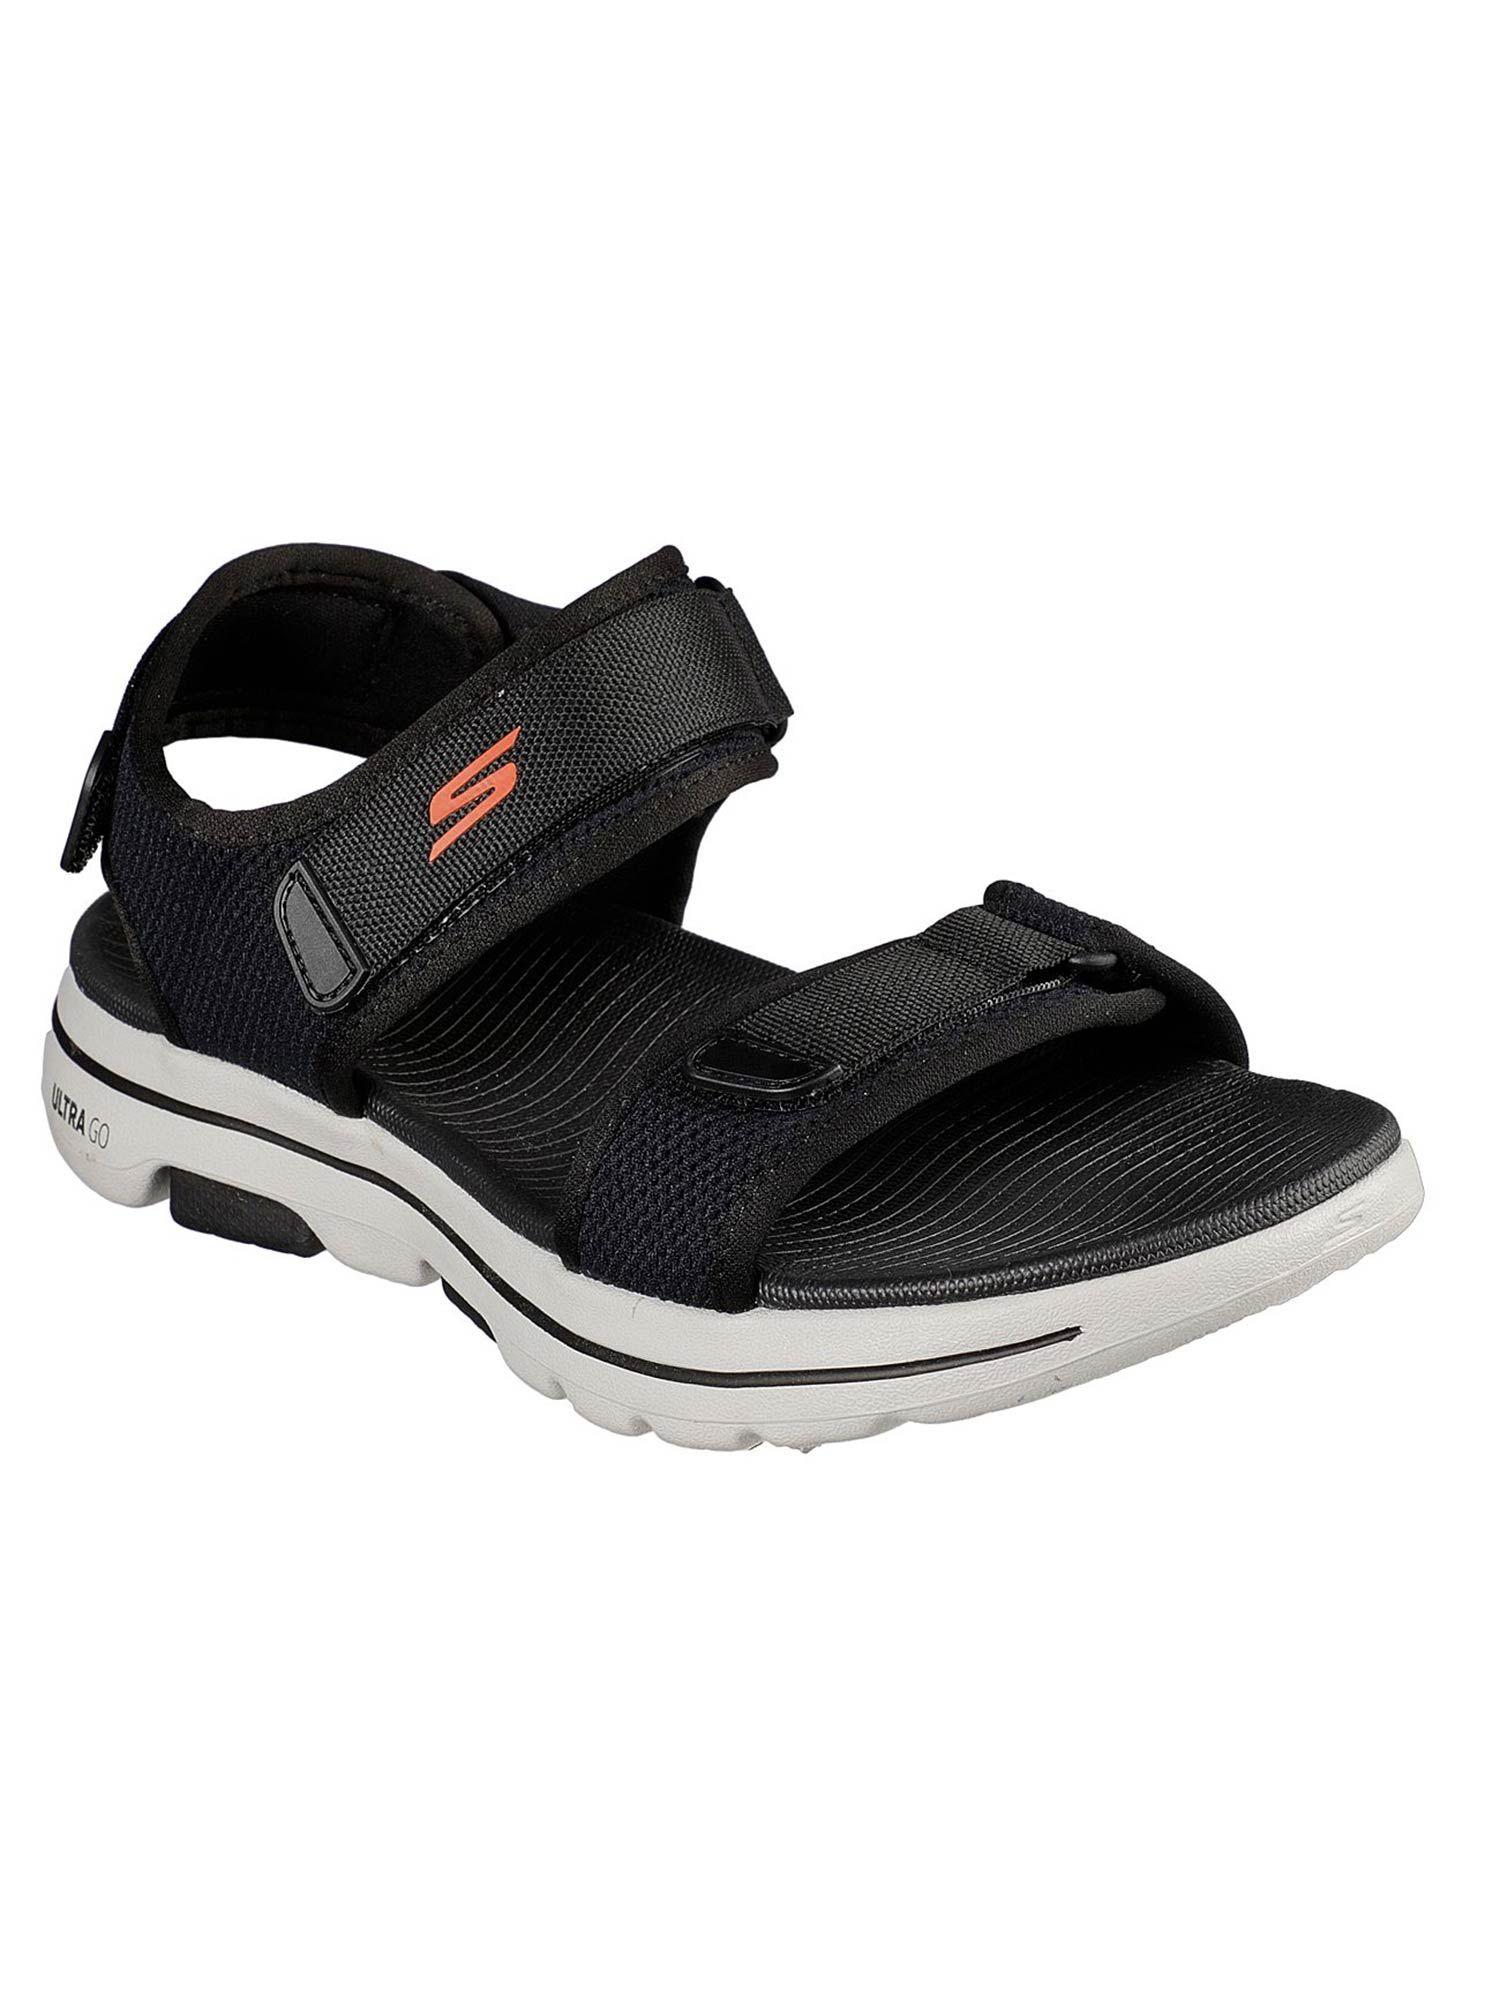 go-walk-5---cabourg-black-sandals